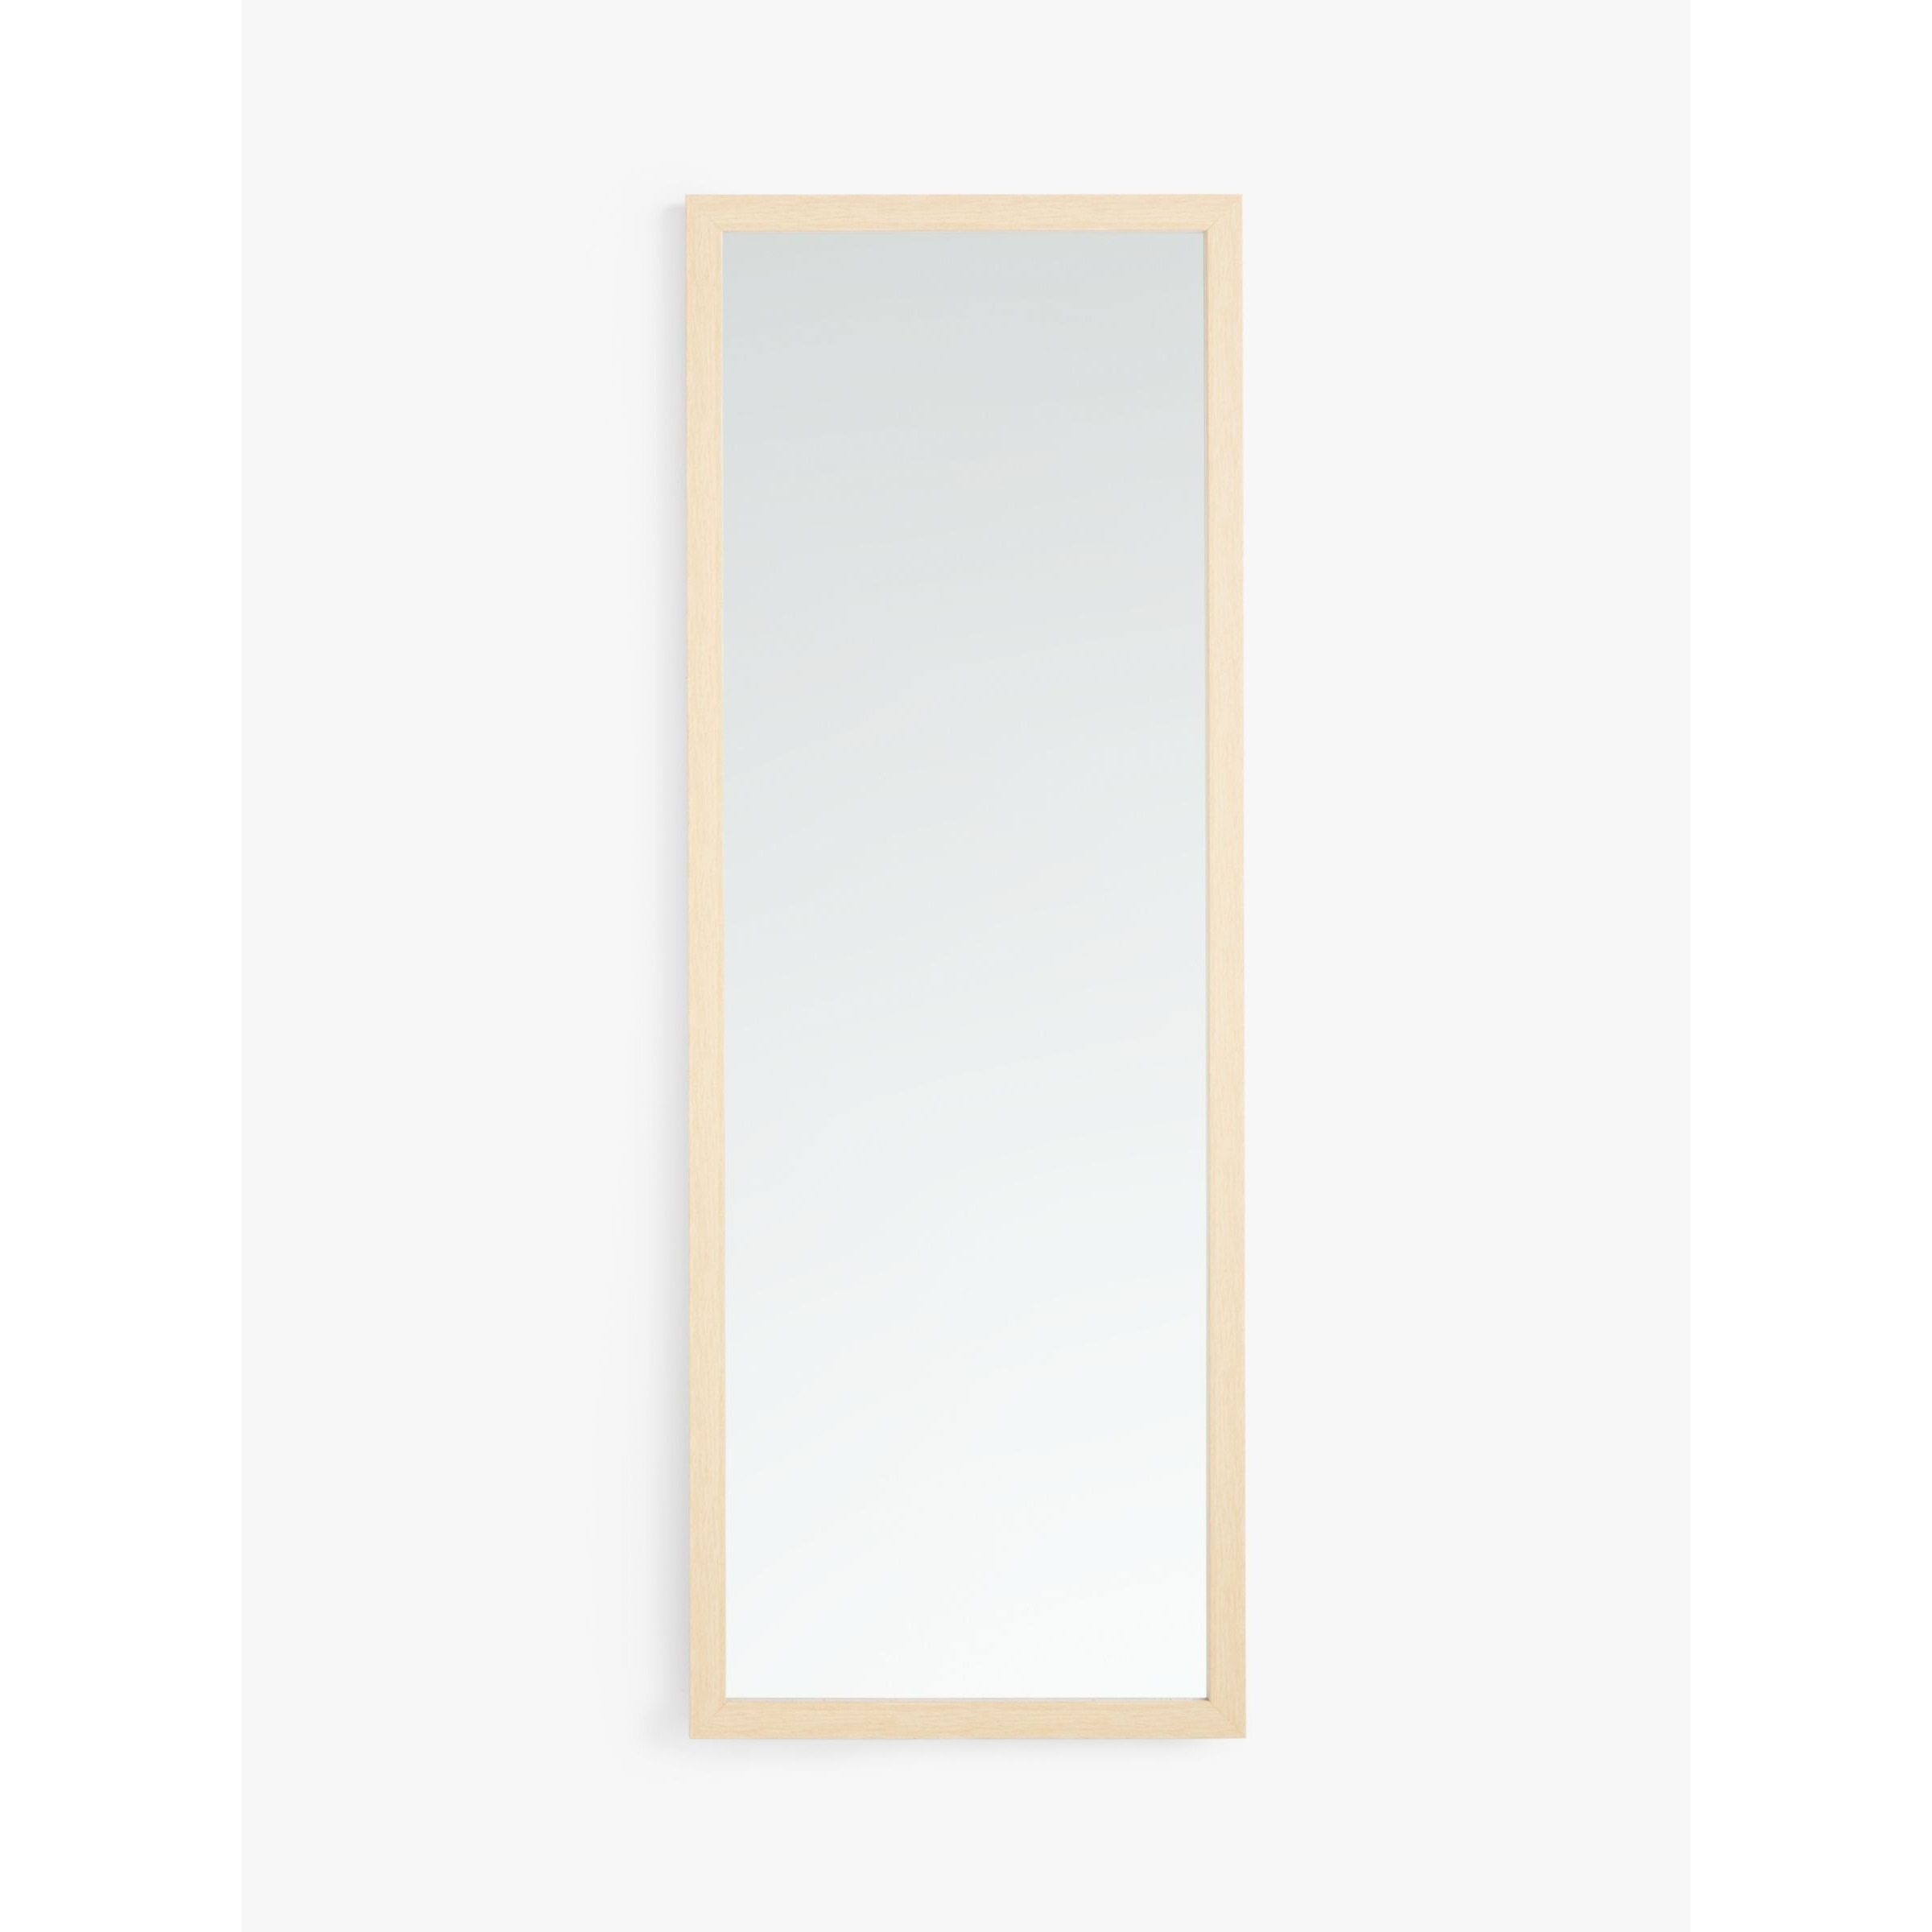 John Lewis ANYDAY Rectangular Wood-Effect Wall Mirror, 125 x 35cm, Natural - image 1